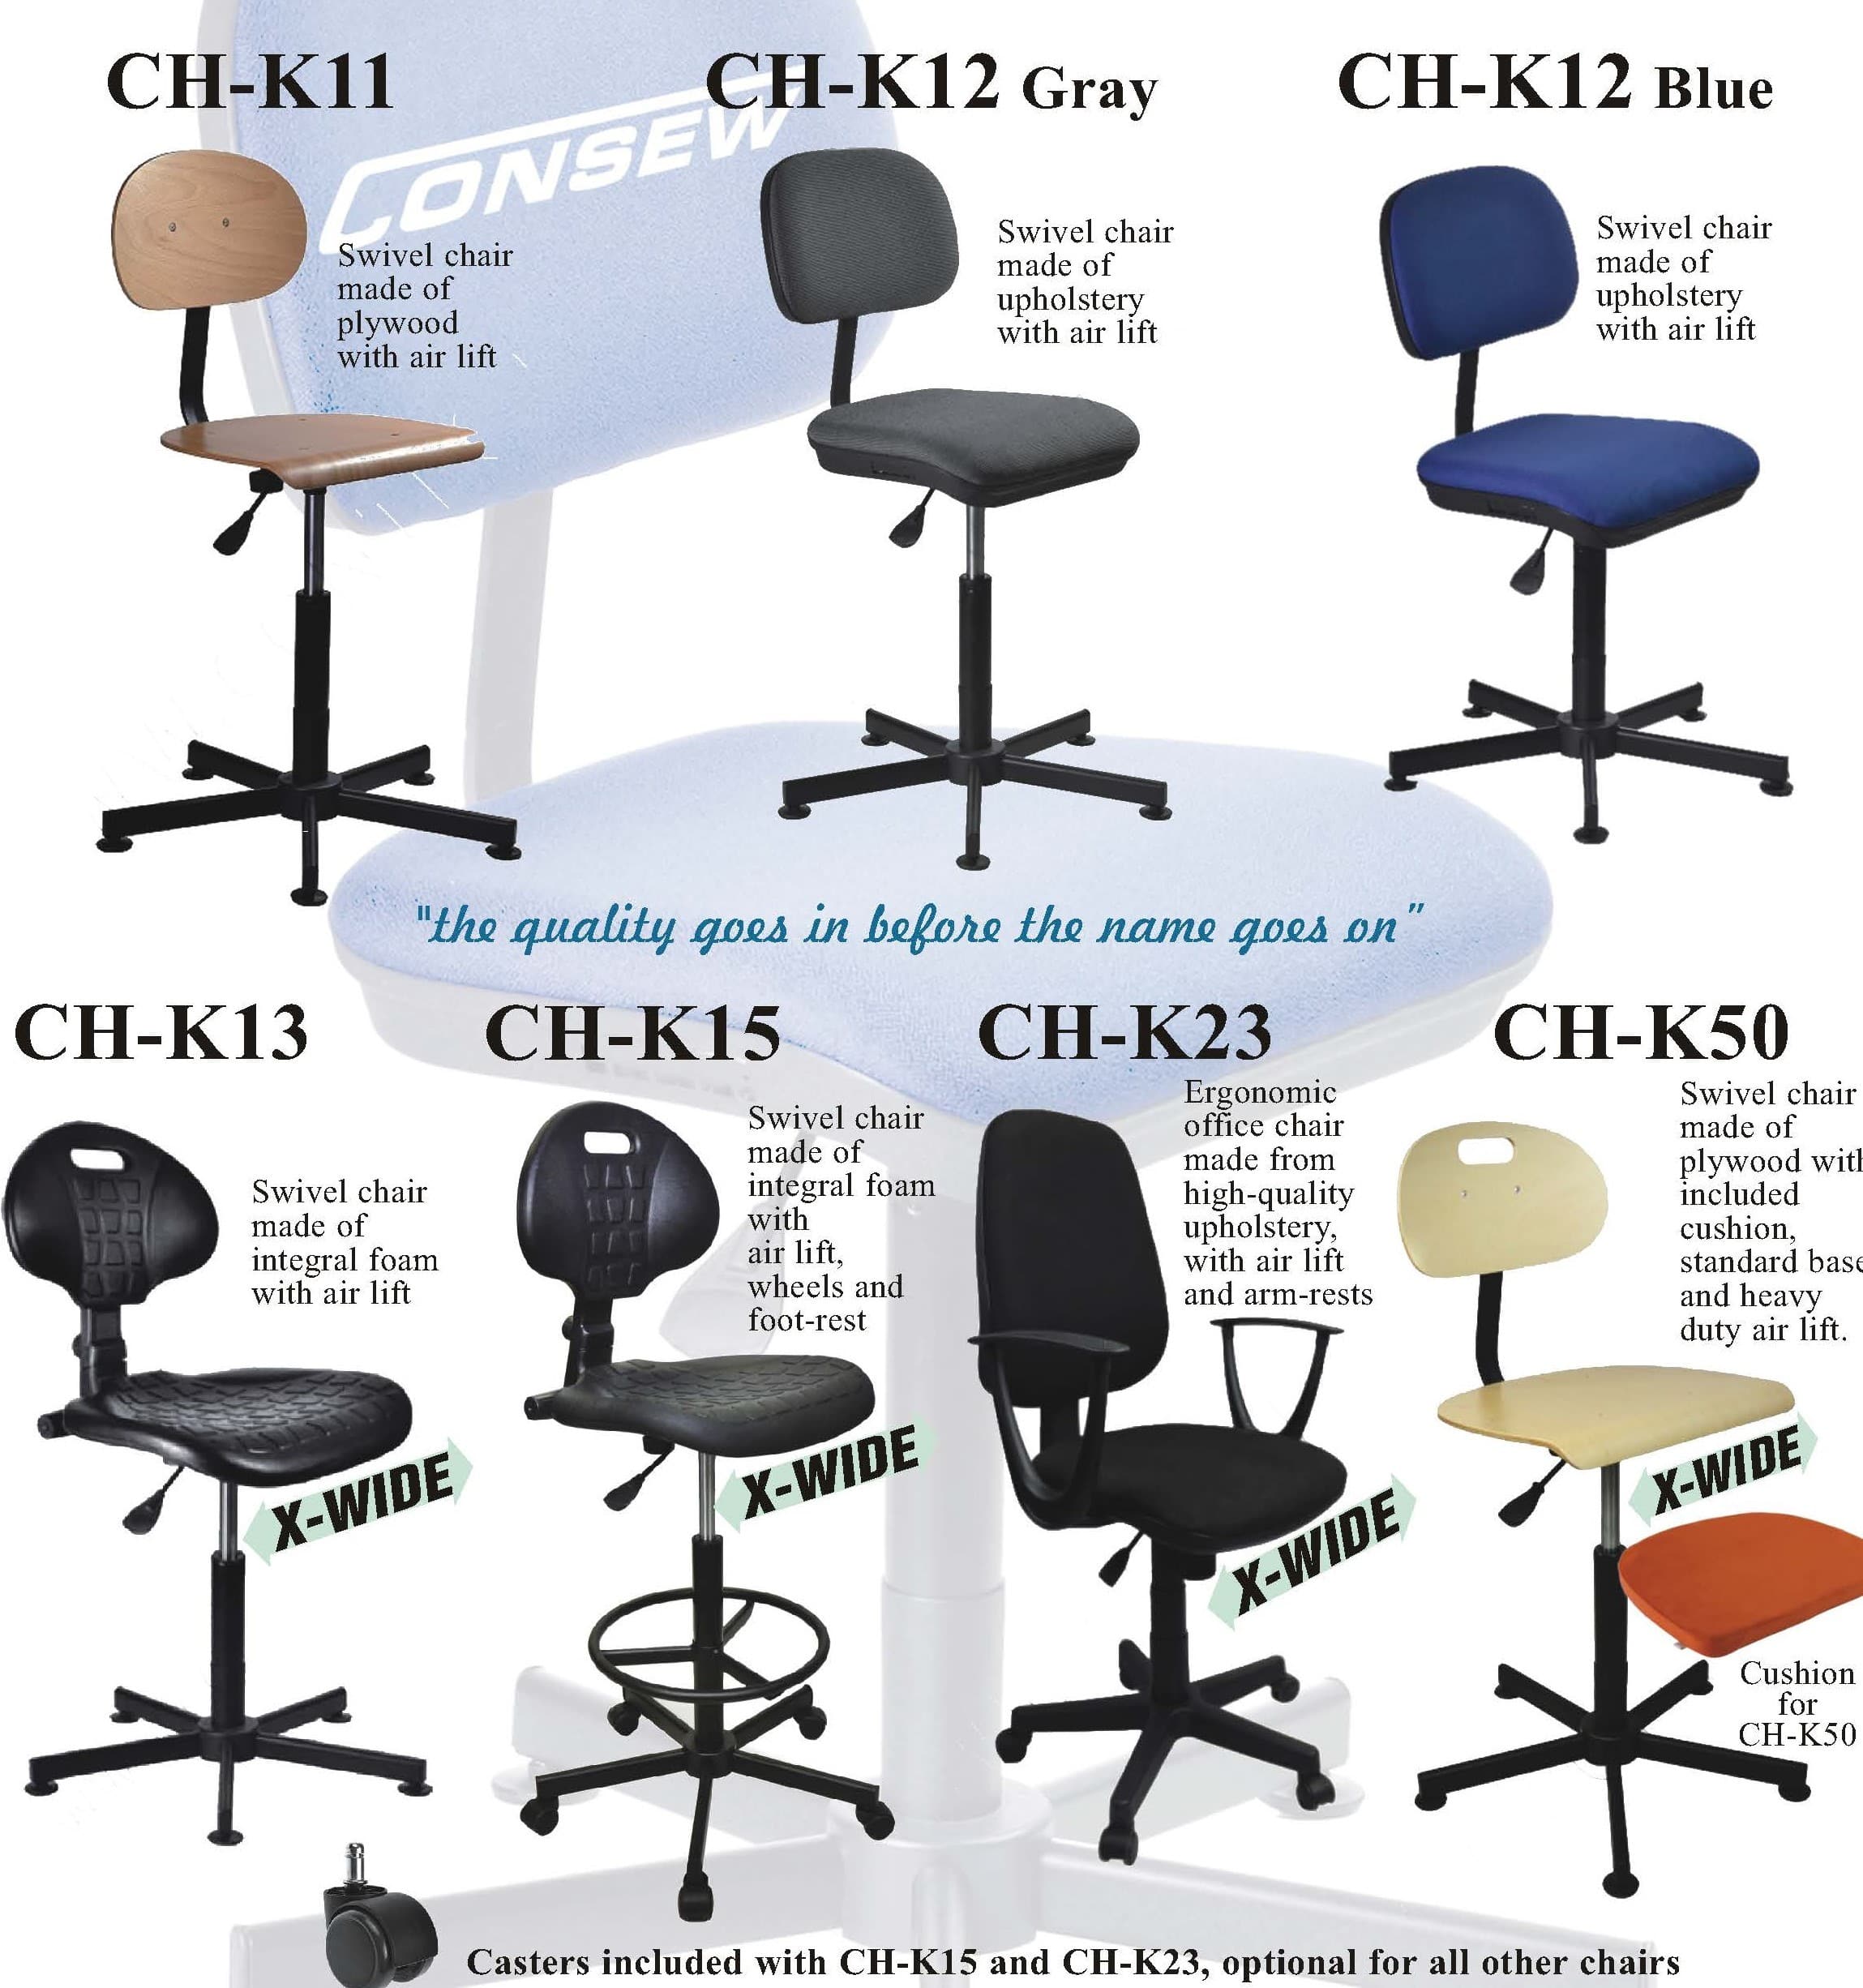 CONSEW ERGONOMIC SEATING
CH-K11, CH-K12, CH-K13, CH-K15, CH-K23, CH-K50